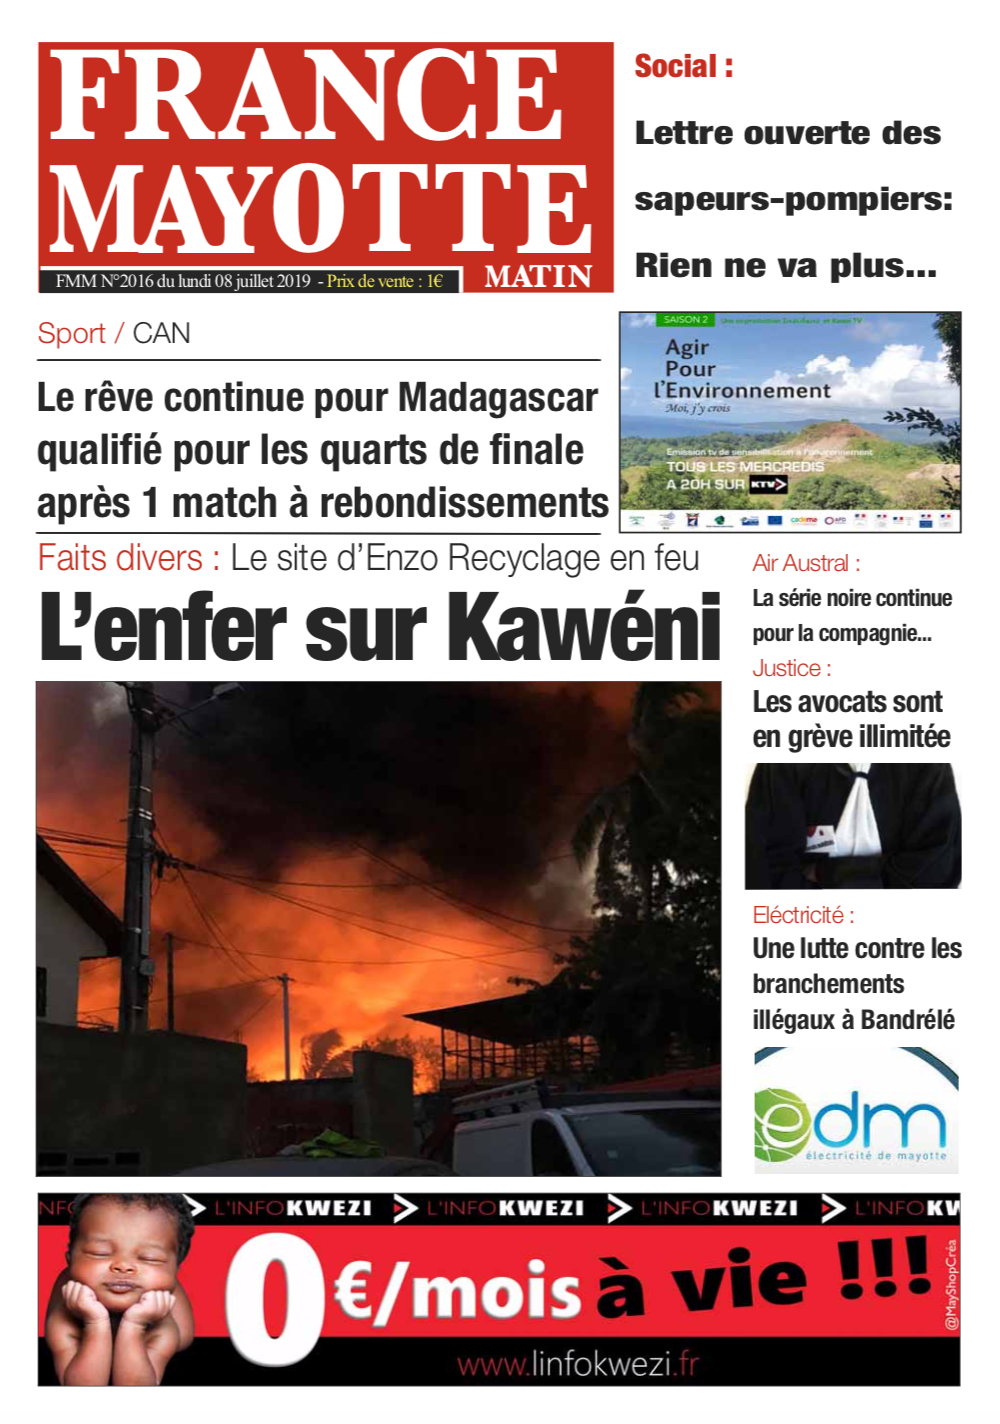 France Mayotte Lundi 8 juillet 2019